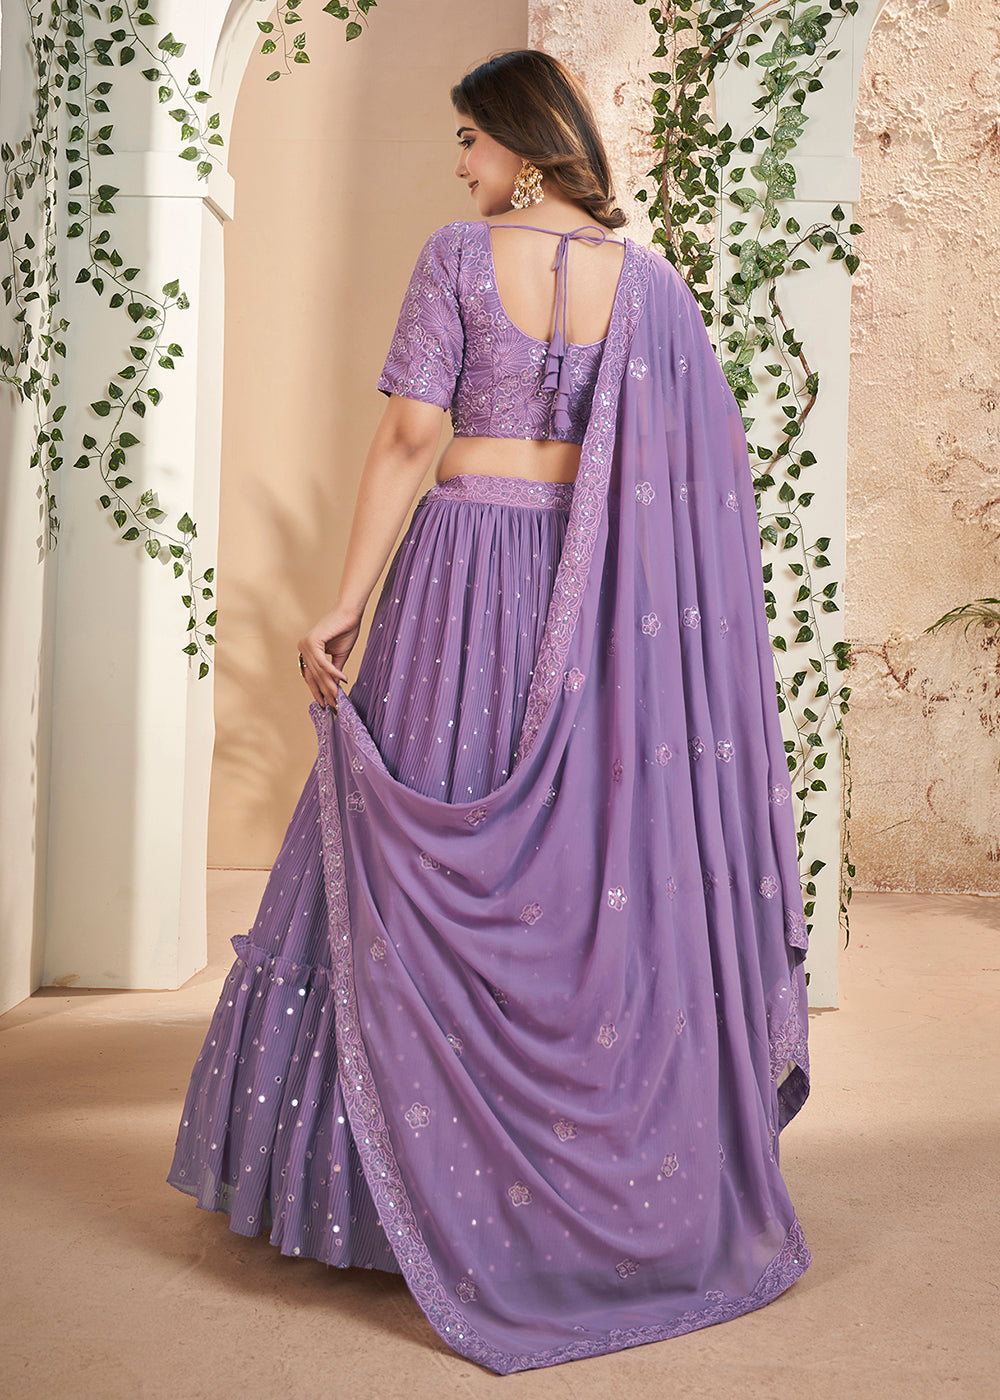 Buy Now Purple Thread & Sequins Wedding Party Lehenga Choli Online in USA, UK, Canada & Worldwide at Empress Clothing.